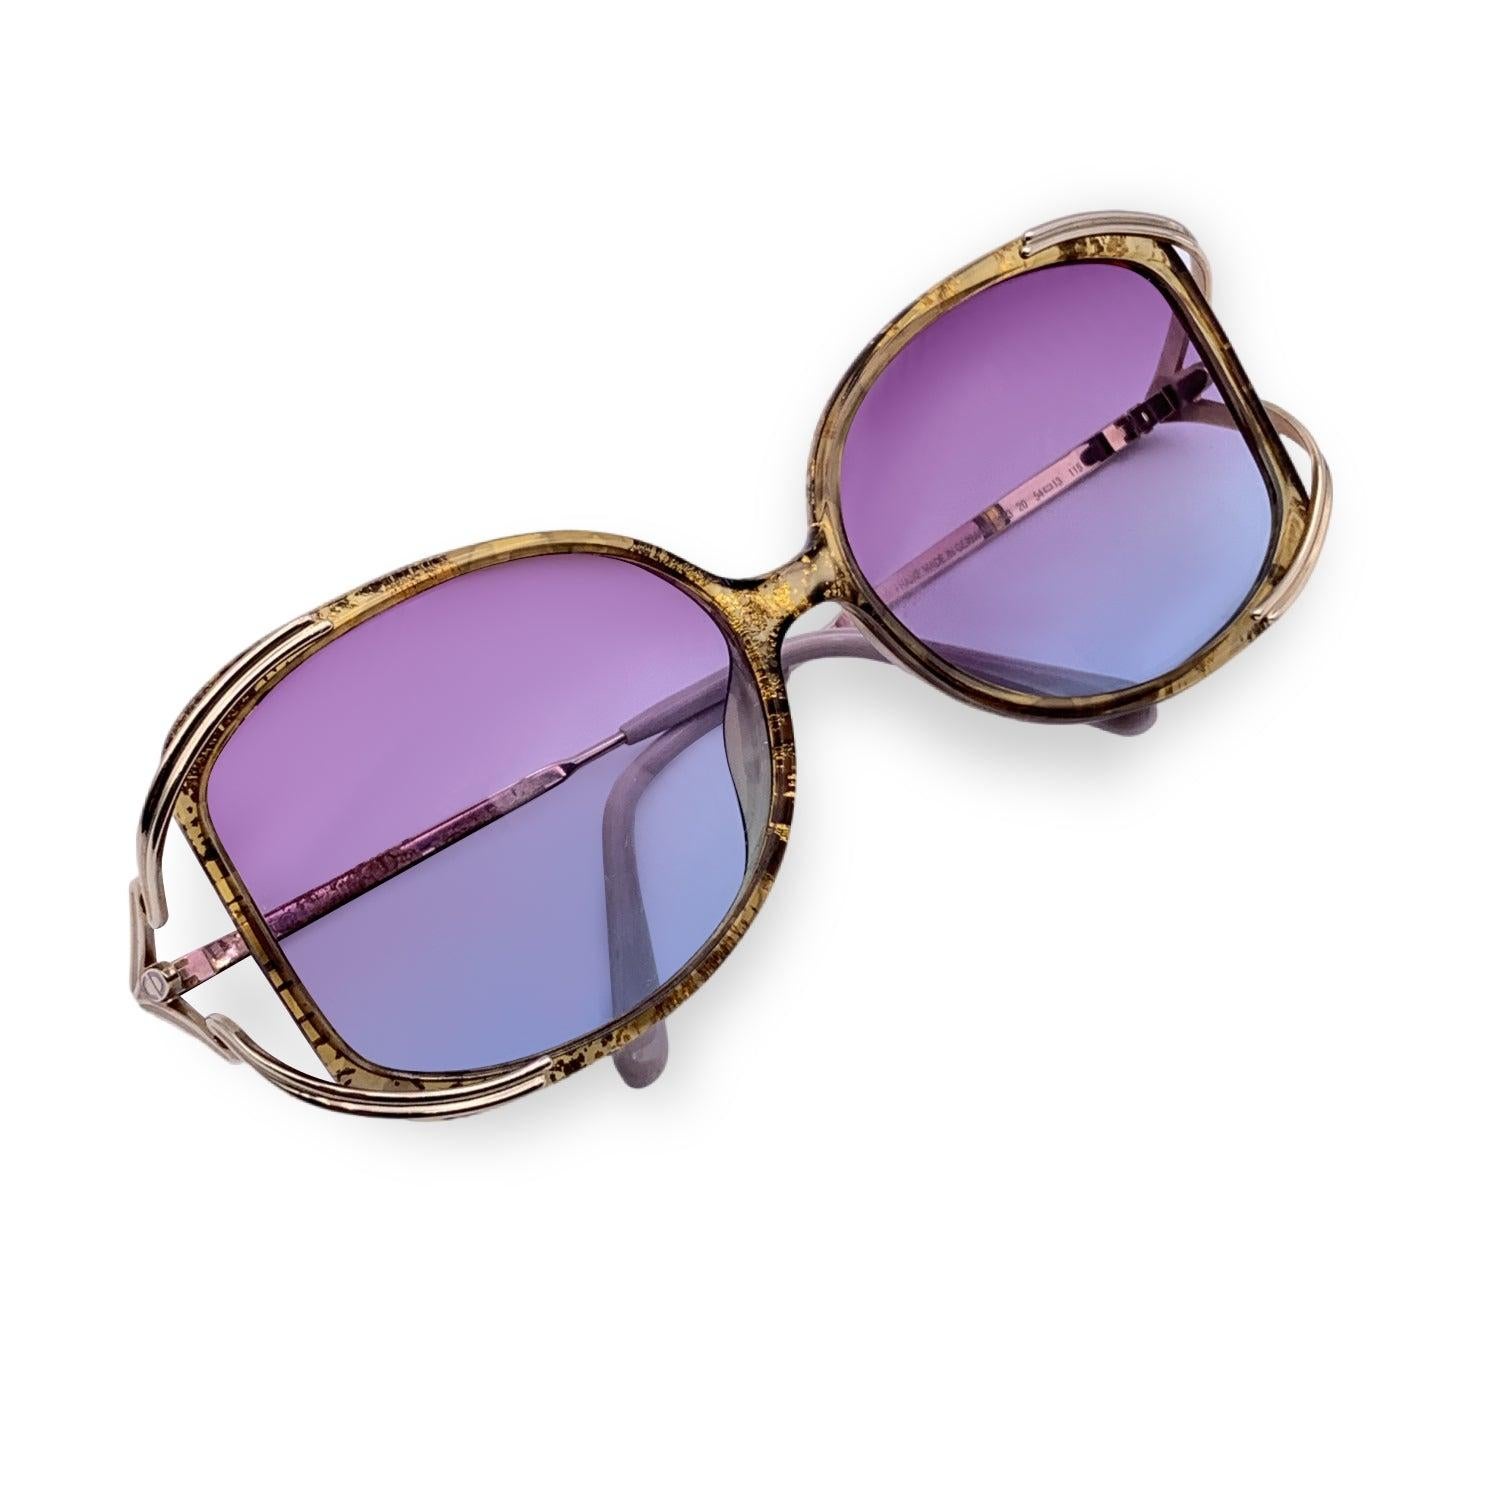 Vintage Christian Dior Women Sunglasses, Mod. 2643 20 - 54/13 115mm. Gold metal frame. 100% Total UVA/UVB protection bi-color purple gradient lenses. CD logos on the side of the temples. Details MATERIAL: Metal COLOR: Gold MODEL: 2643 GENDER: Women